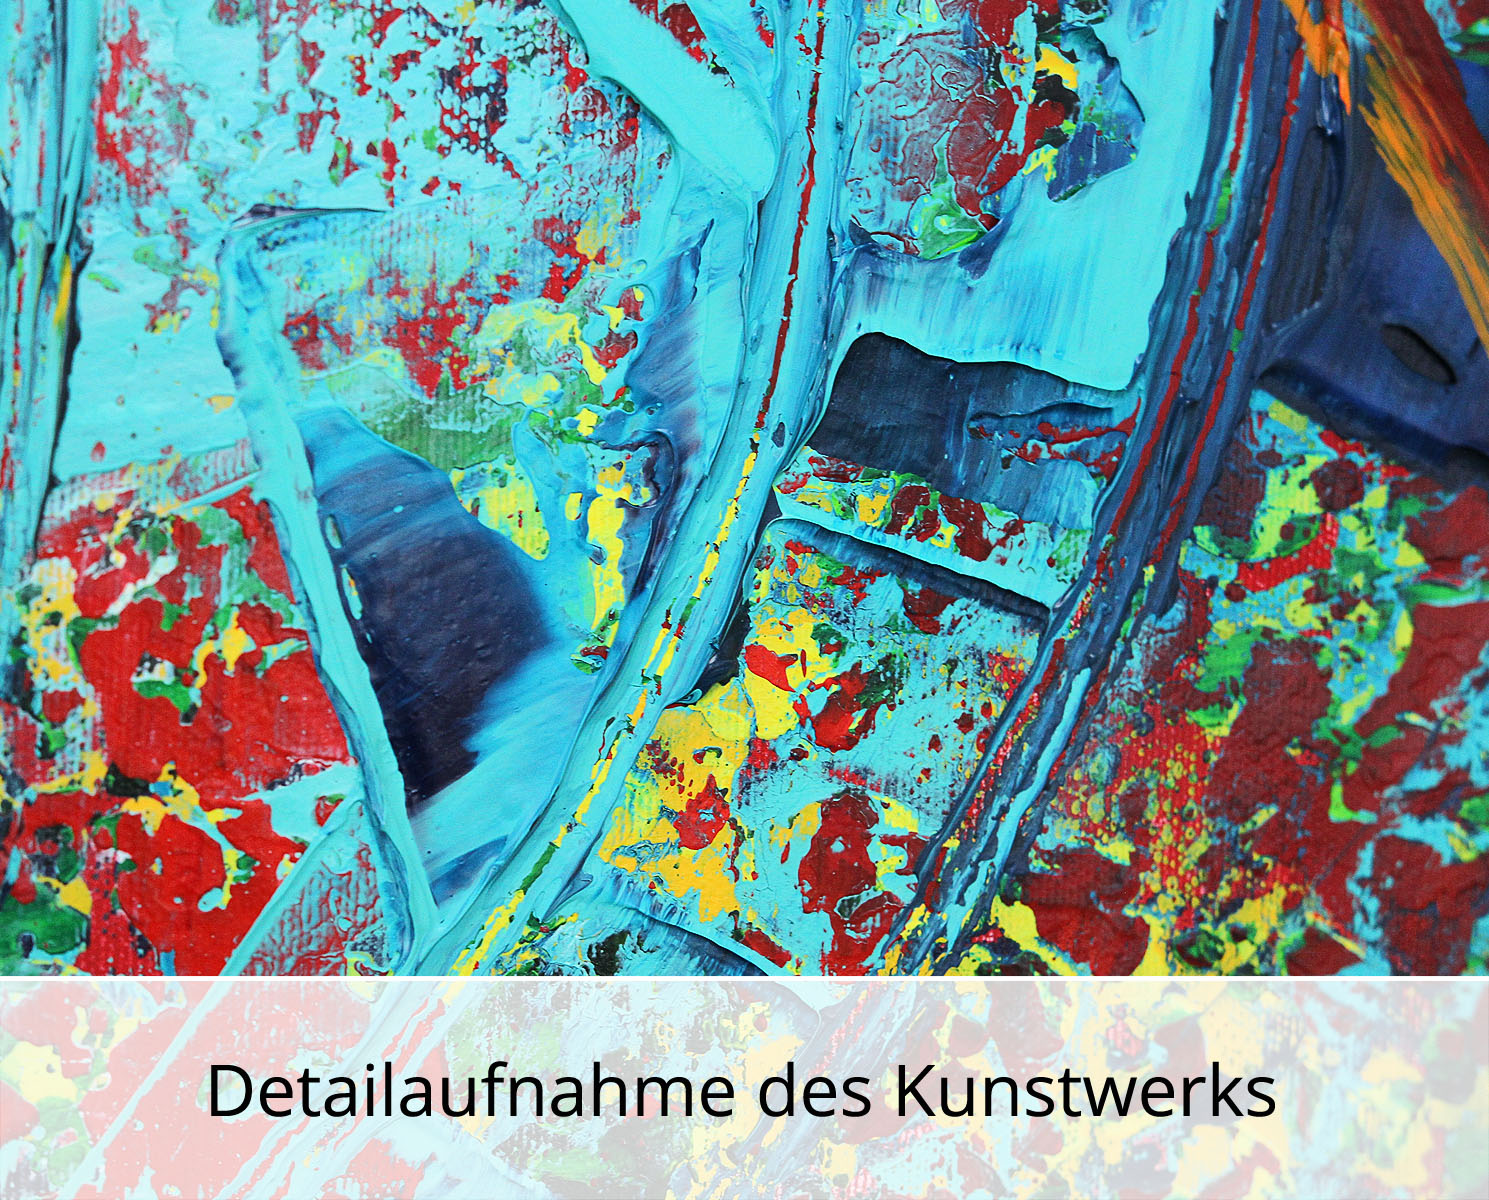 Abstraktes Originalgemälde: "Wertschätzung I", R. König, Unikat